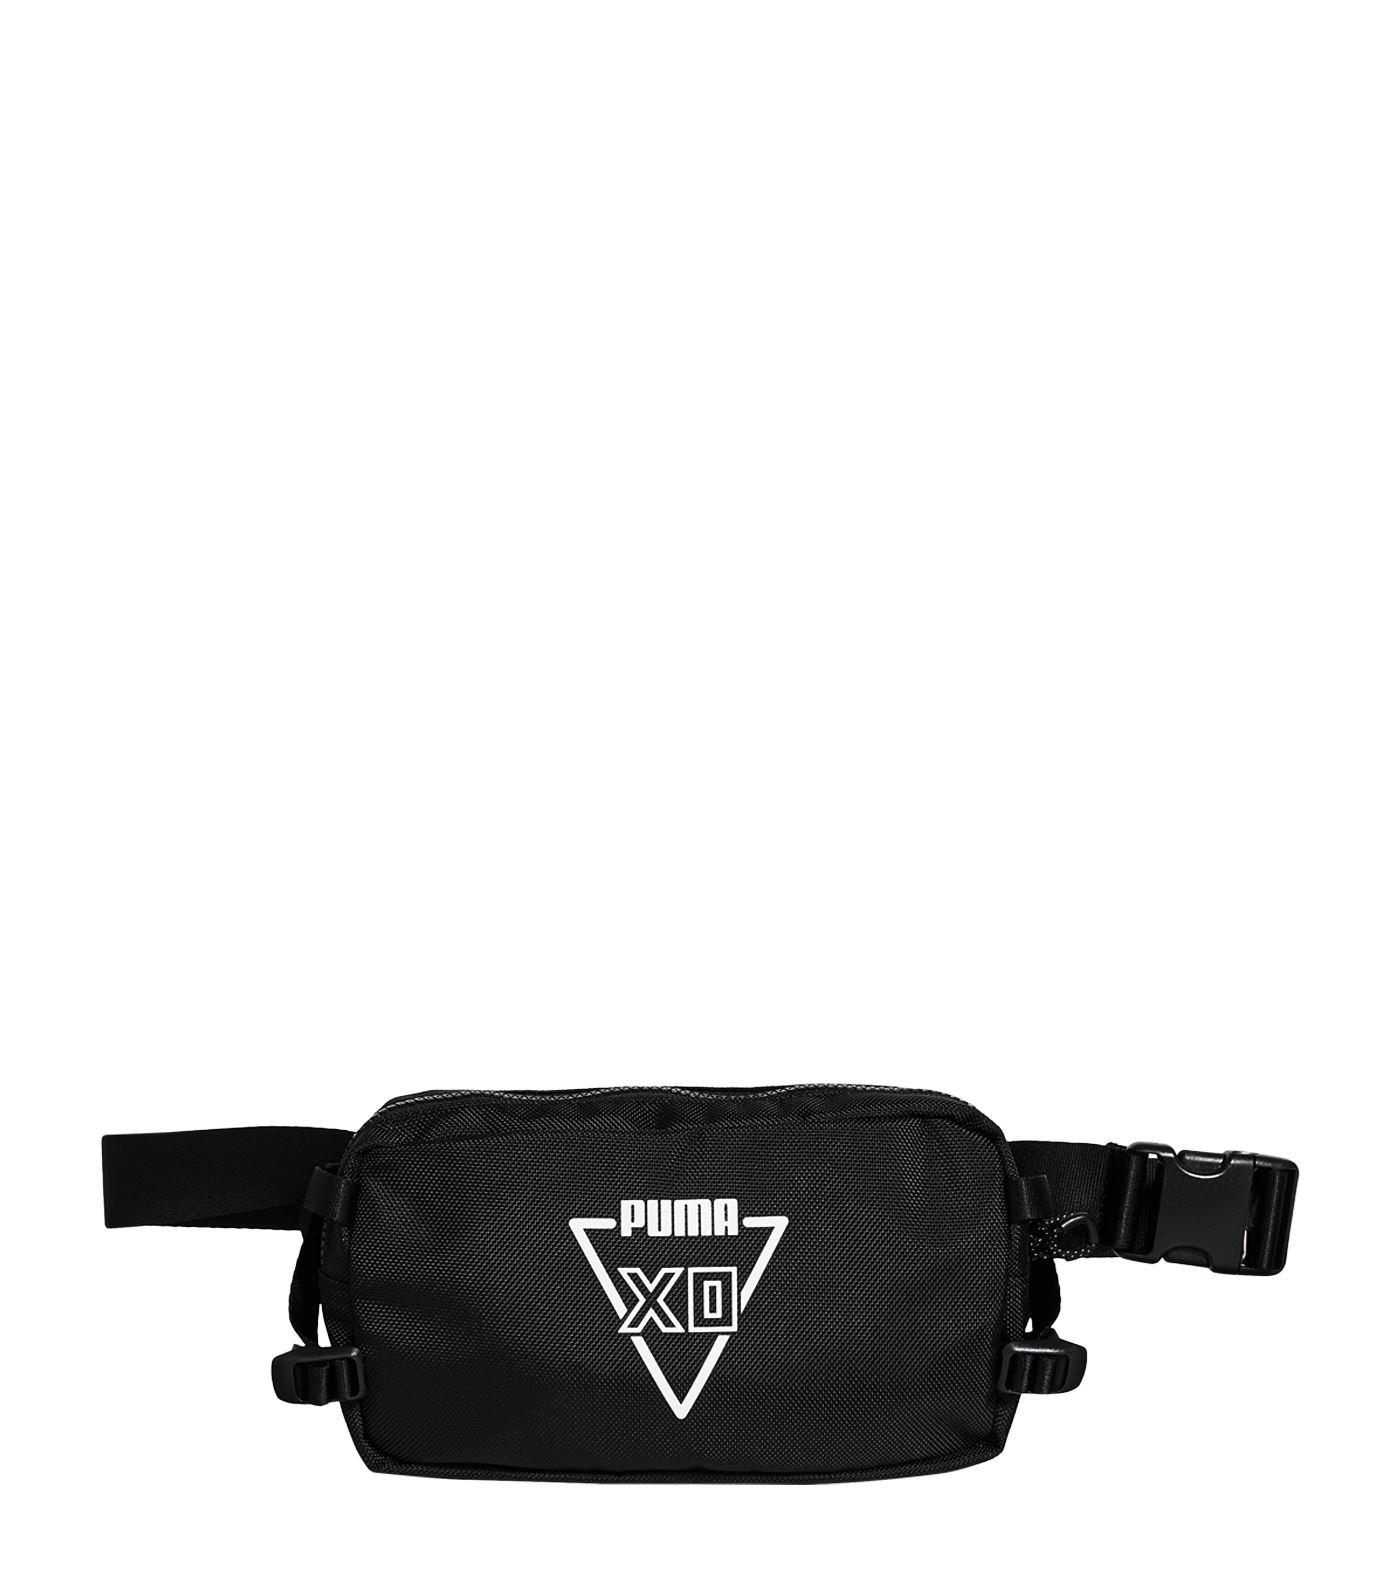 PUMA Canvas X Xo Belt Bag in Black for 